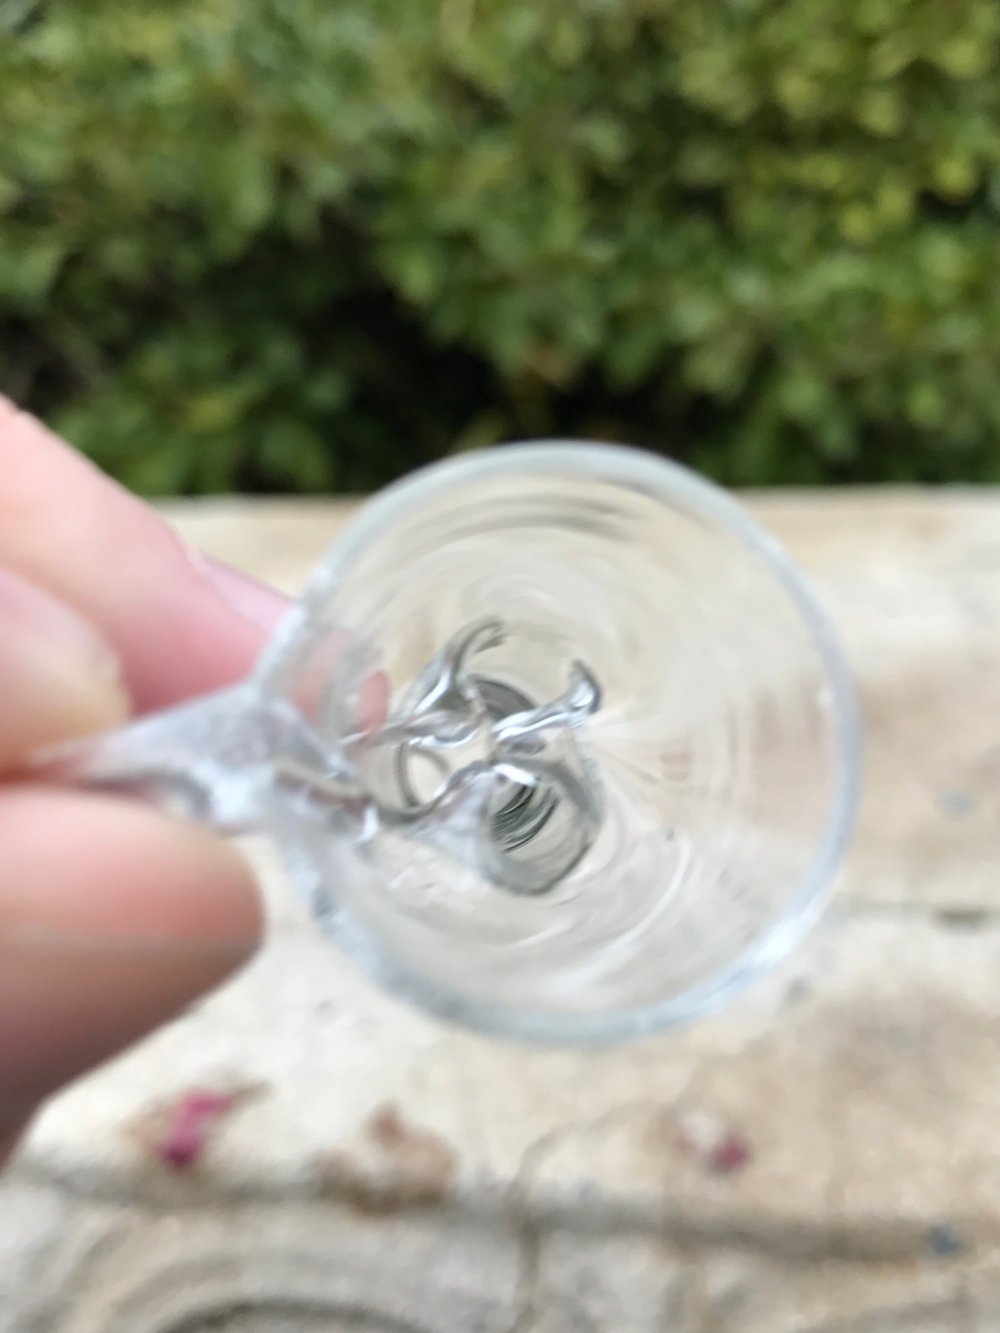 Pin Shape Colorful Glass Bong